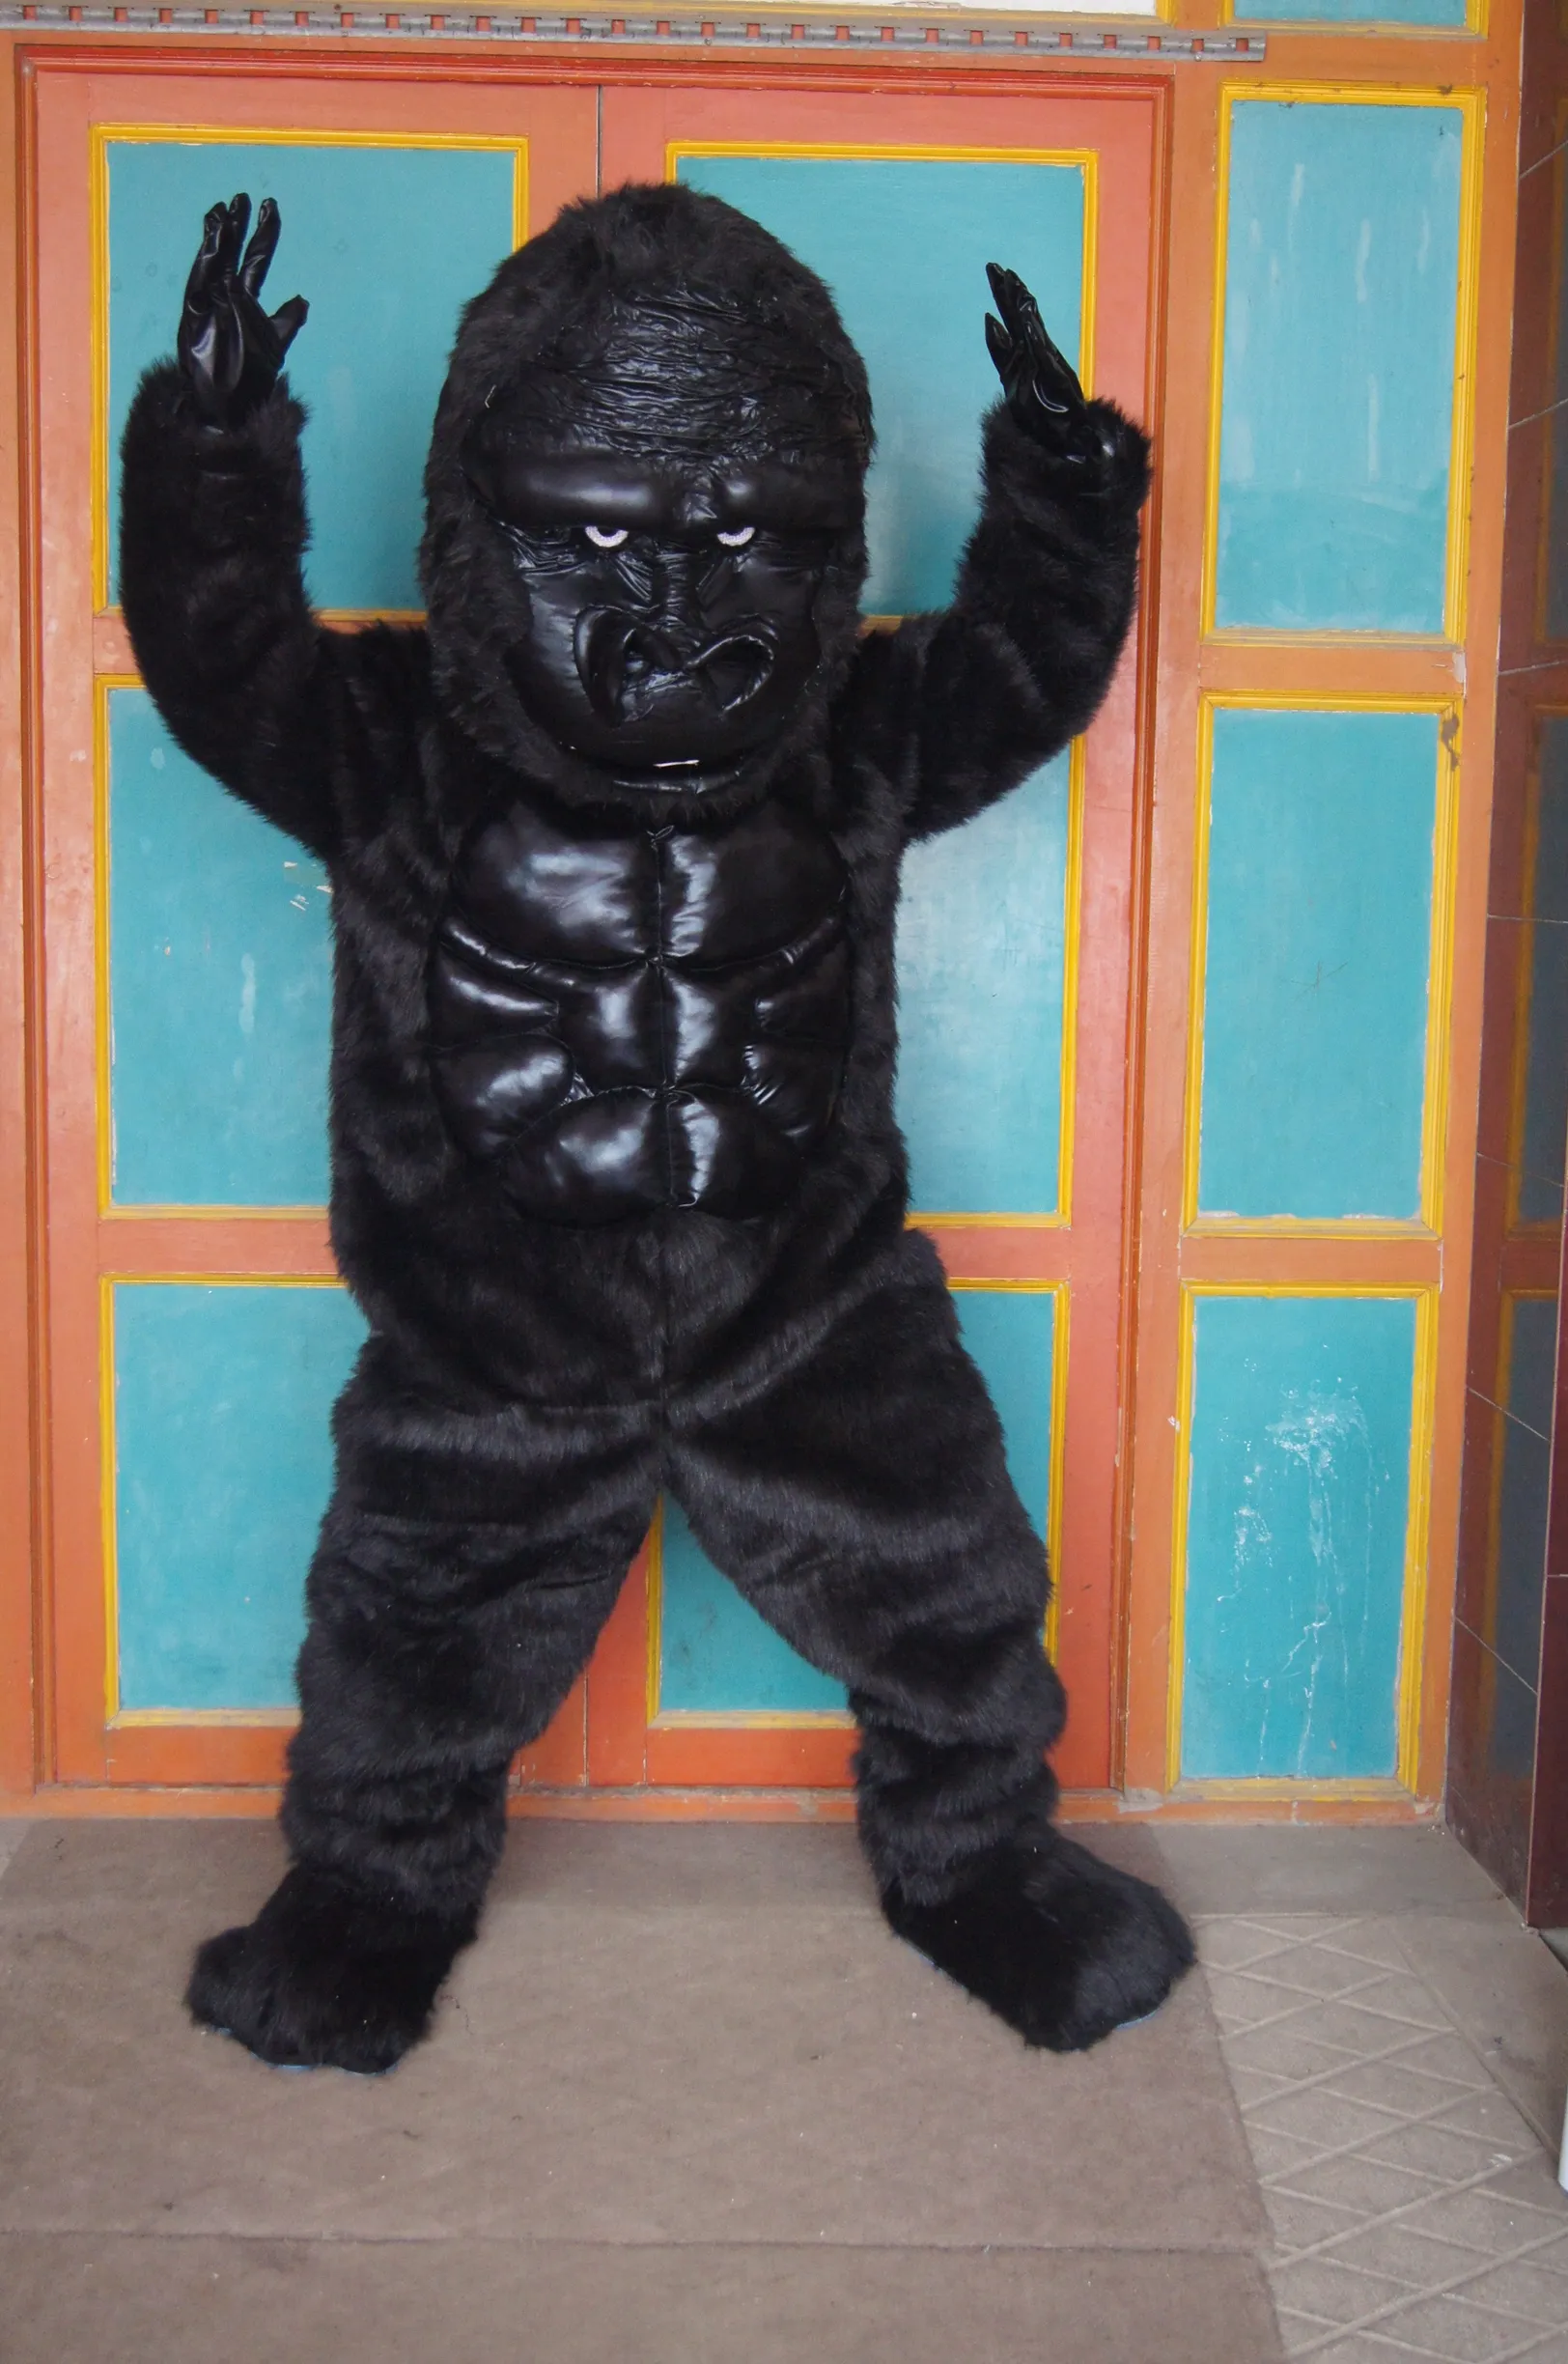 Hot Sale Cartoon Movie Character Real orangutan Gorilla chimpanzee jocko chimp mascot costume Adult Size 